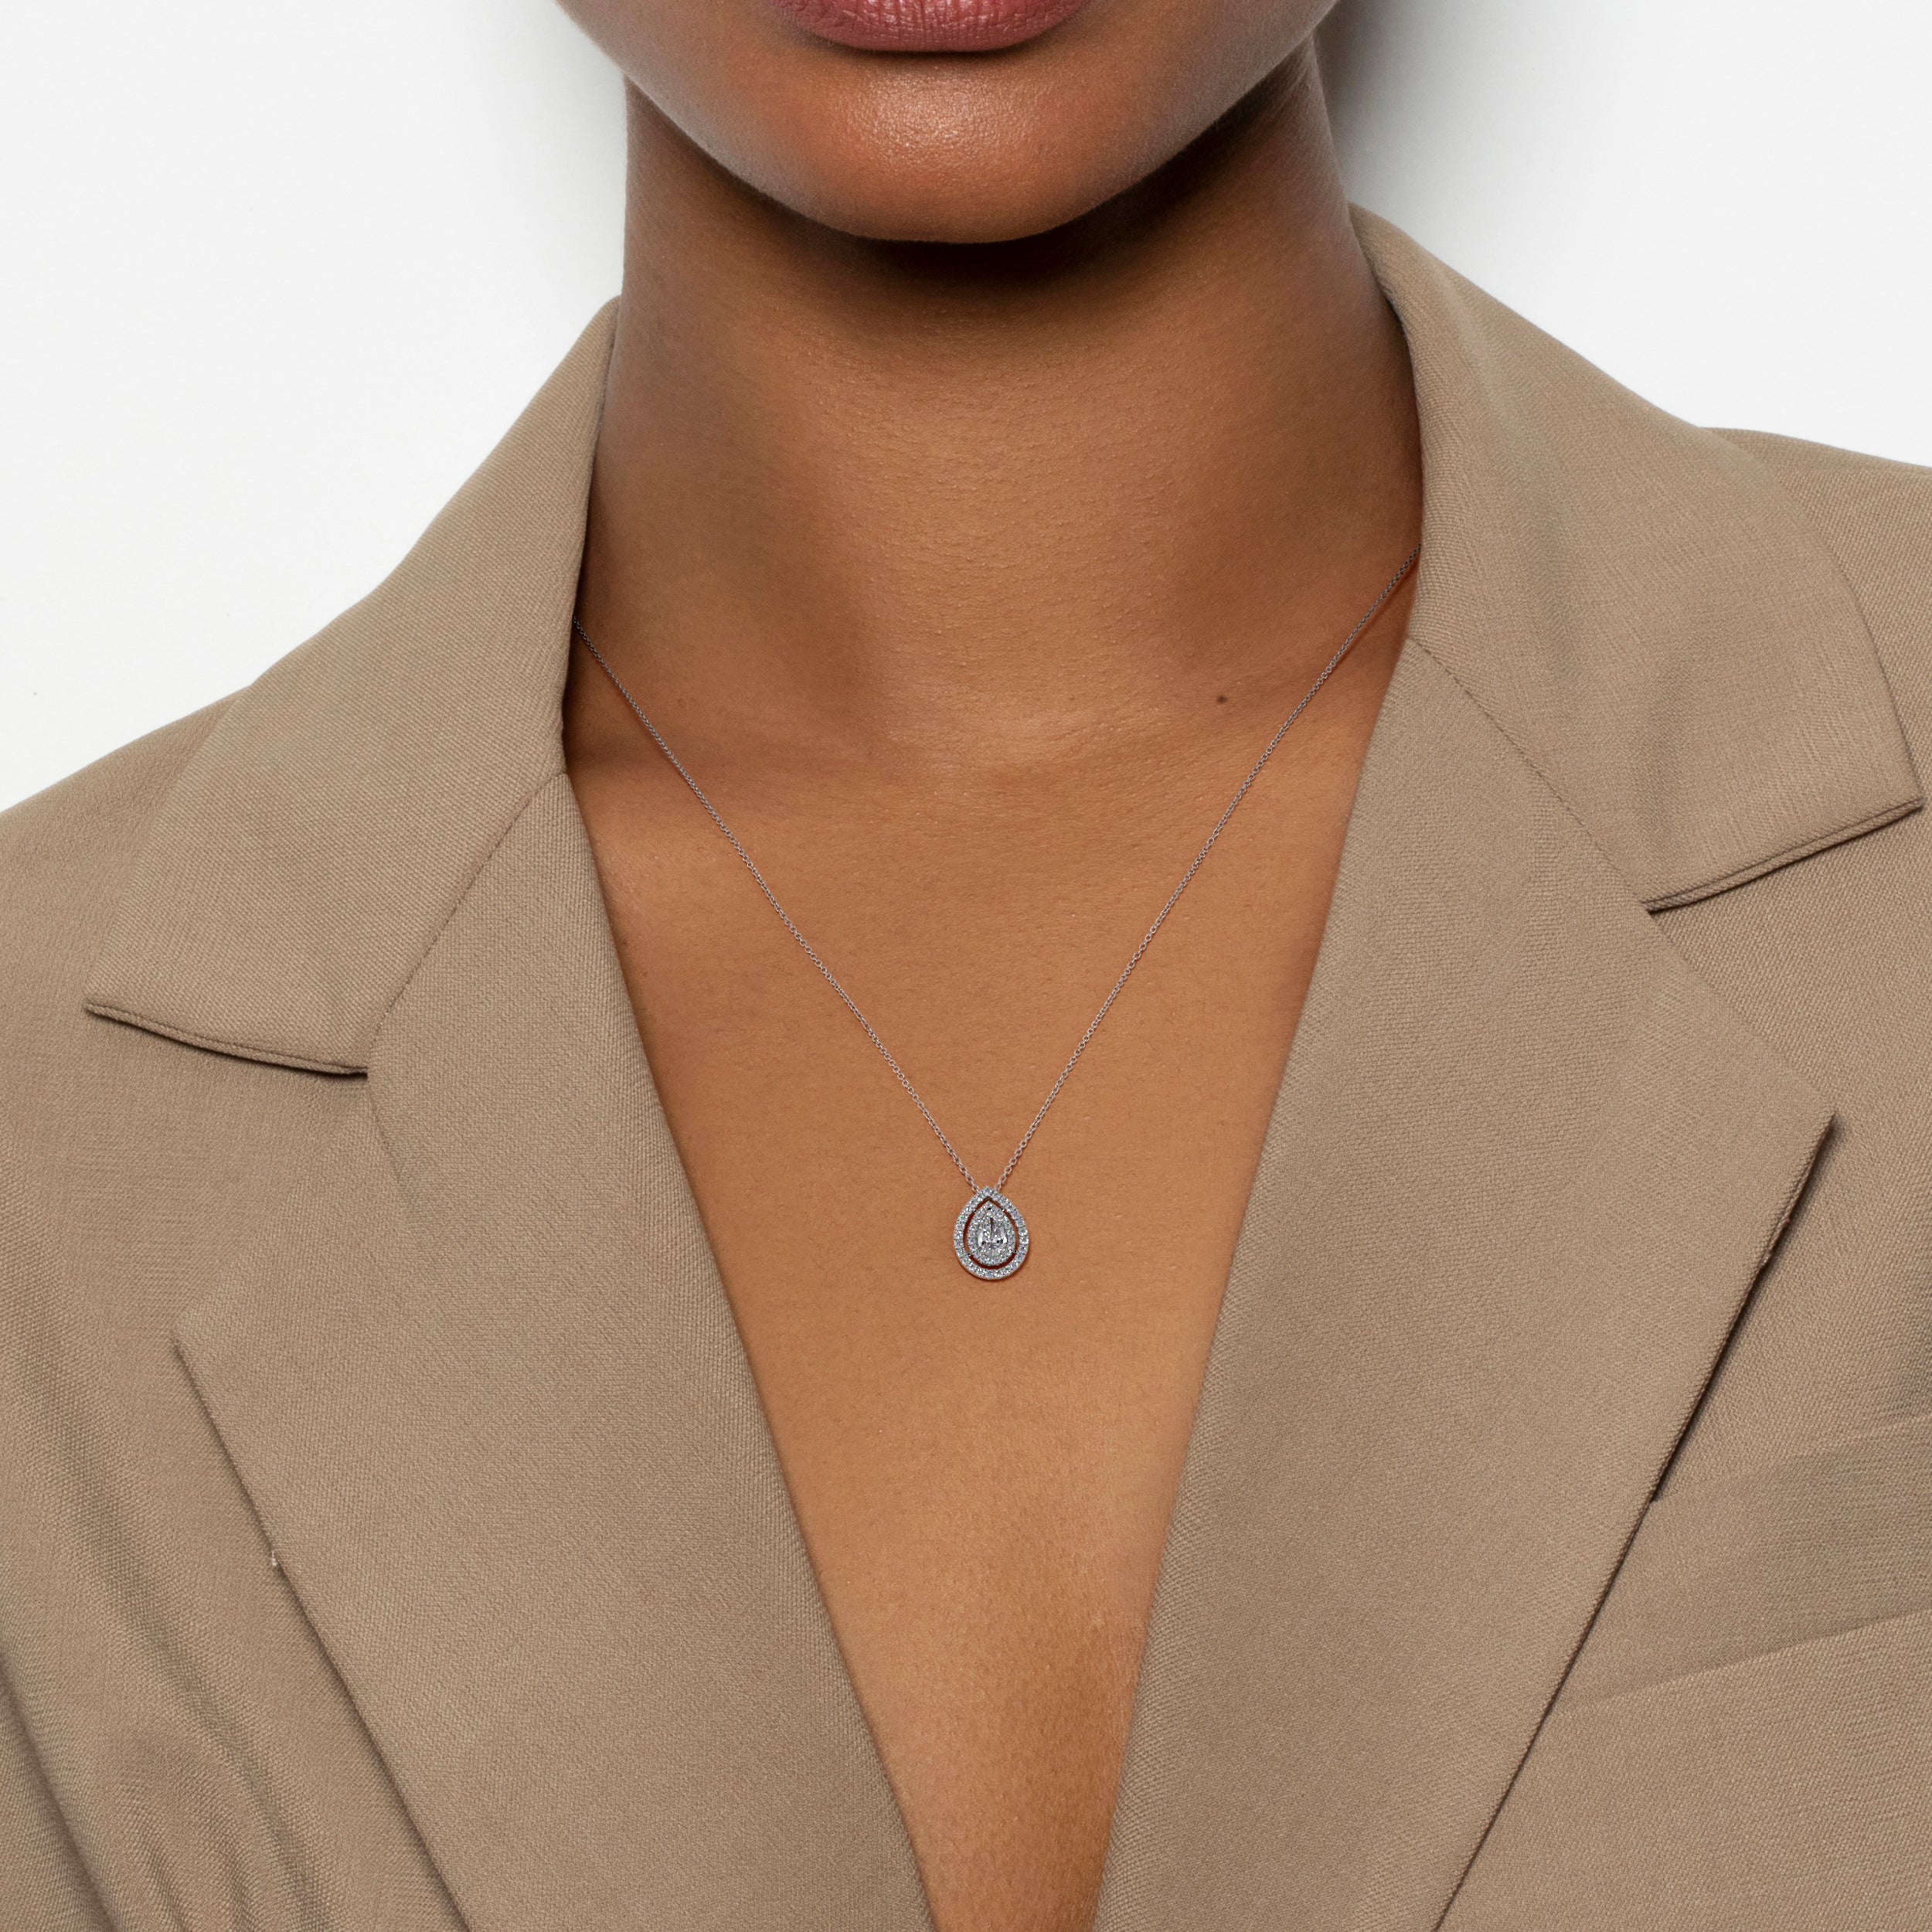 0.5 Carat Oval Shape Diamond - Classic Pendant Necklace - 18K Rose Gold  Plating Over Silver - Walmart.com